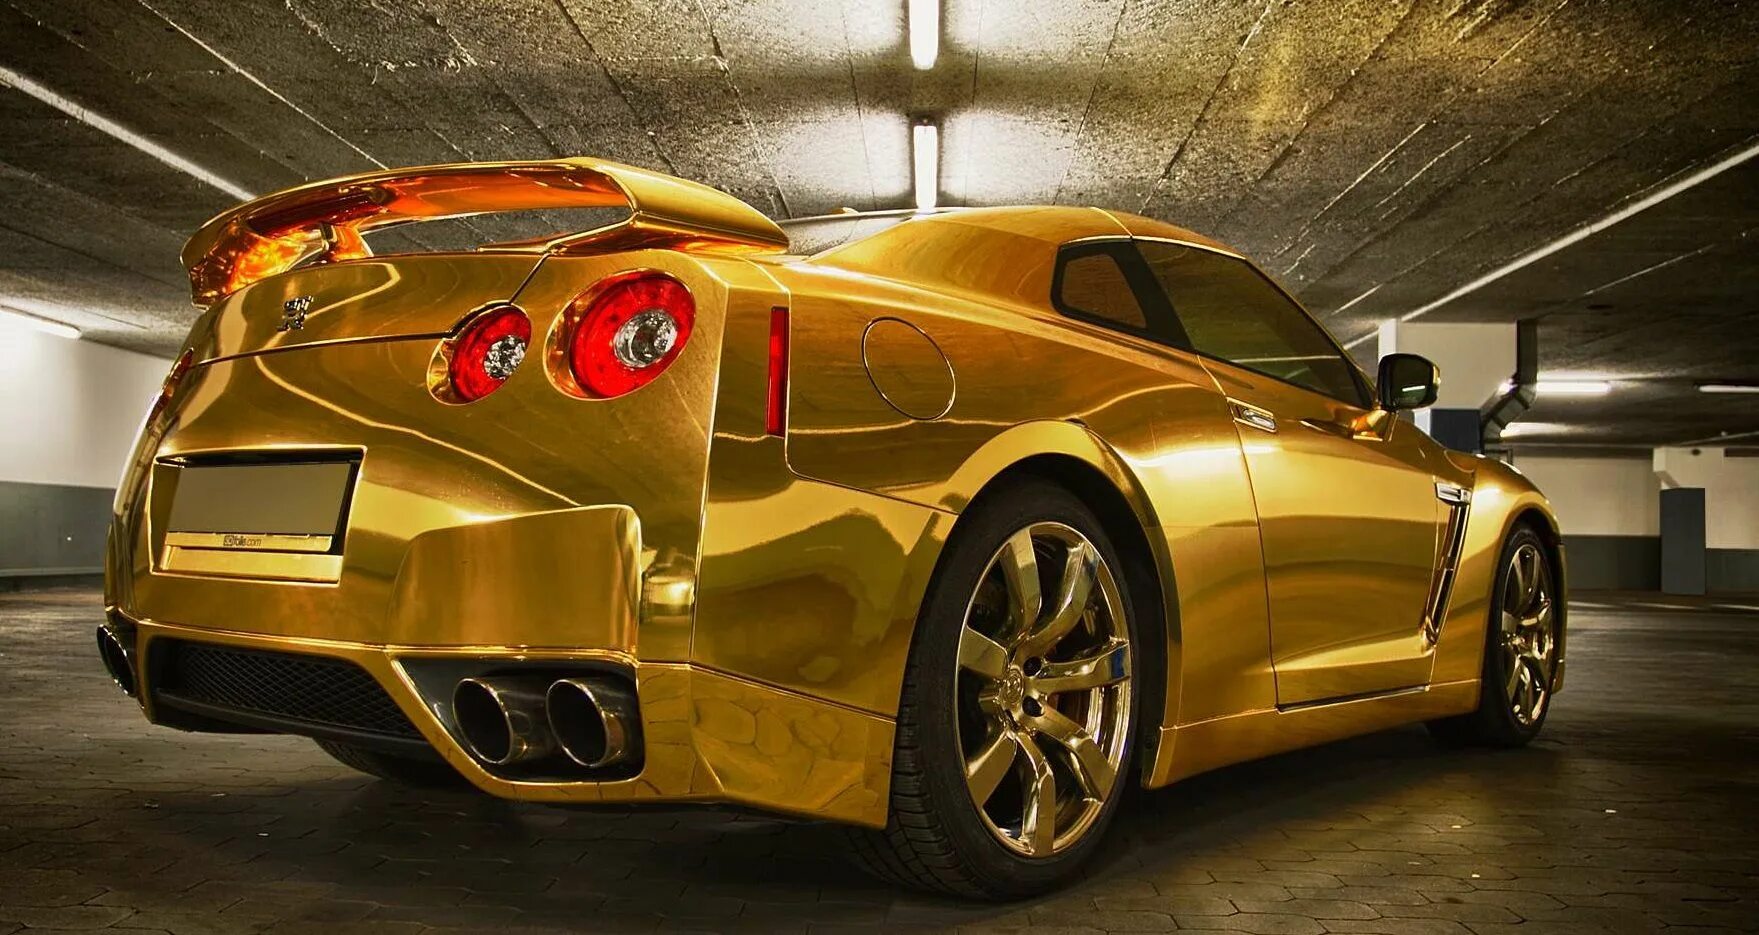 Nissan GTR r35 Gold. Nissan GTR 35 Gold. Ниссан ГТР 35 золотой. Nissan gt-r r35 Gold.